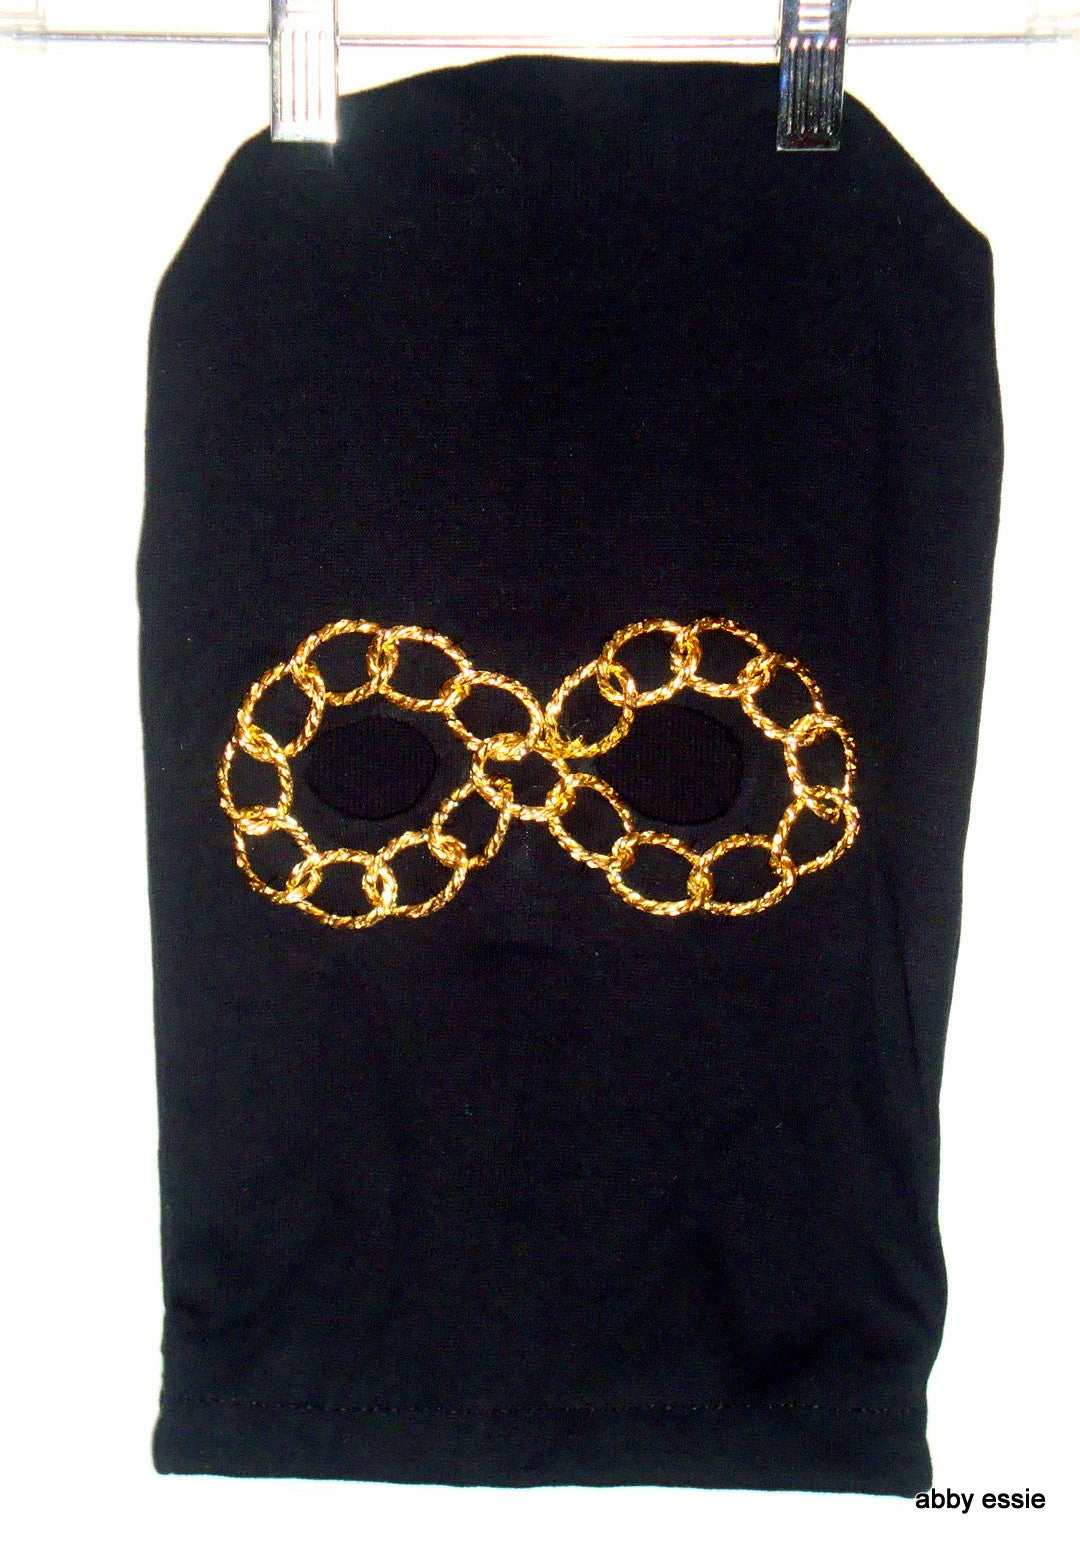 NEW Designer Handmade HIP HOP ROCK STAR METAL BAND BLACK KNIT GOLD CHAIN EYE SKI MASK COSTUME HAND